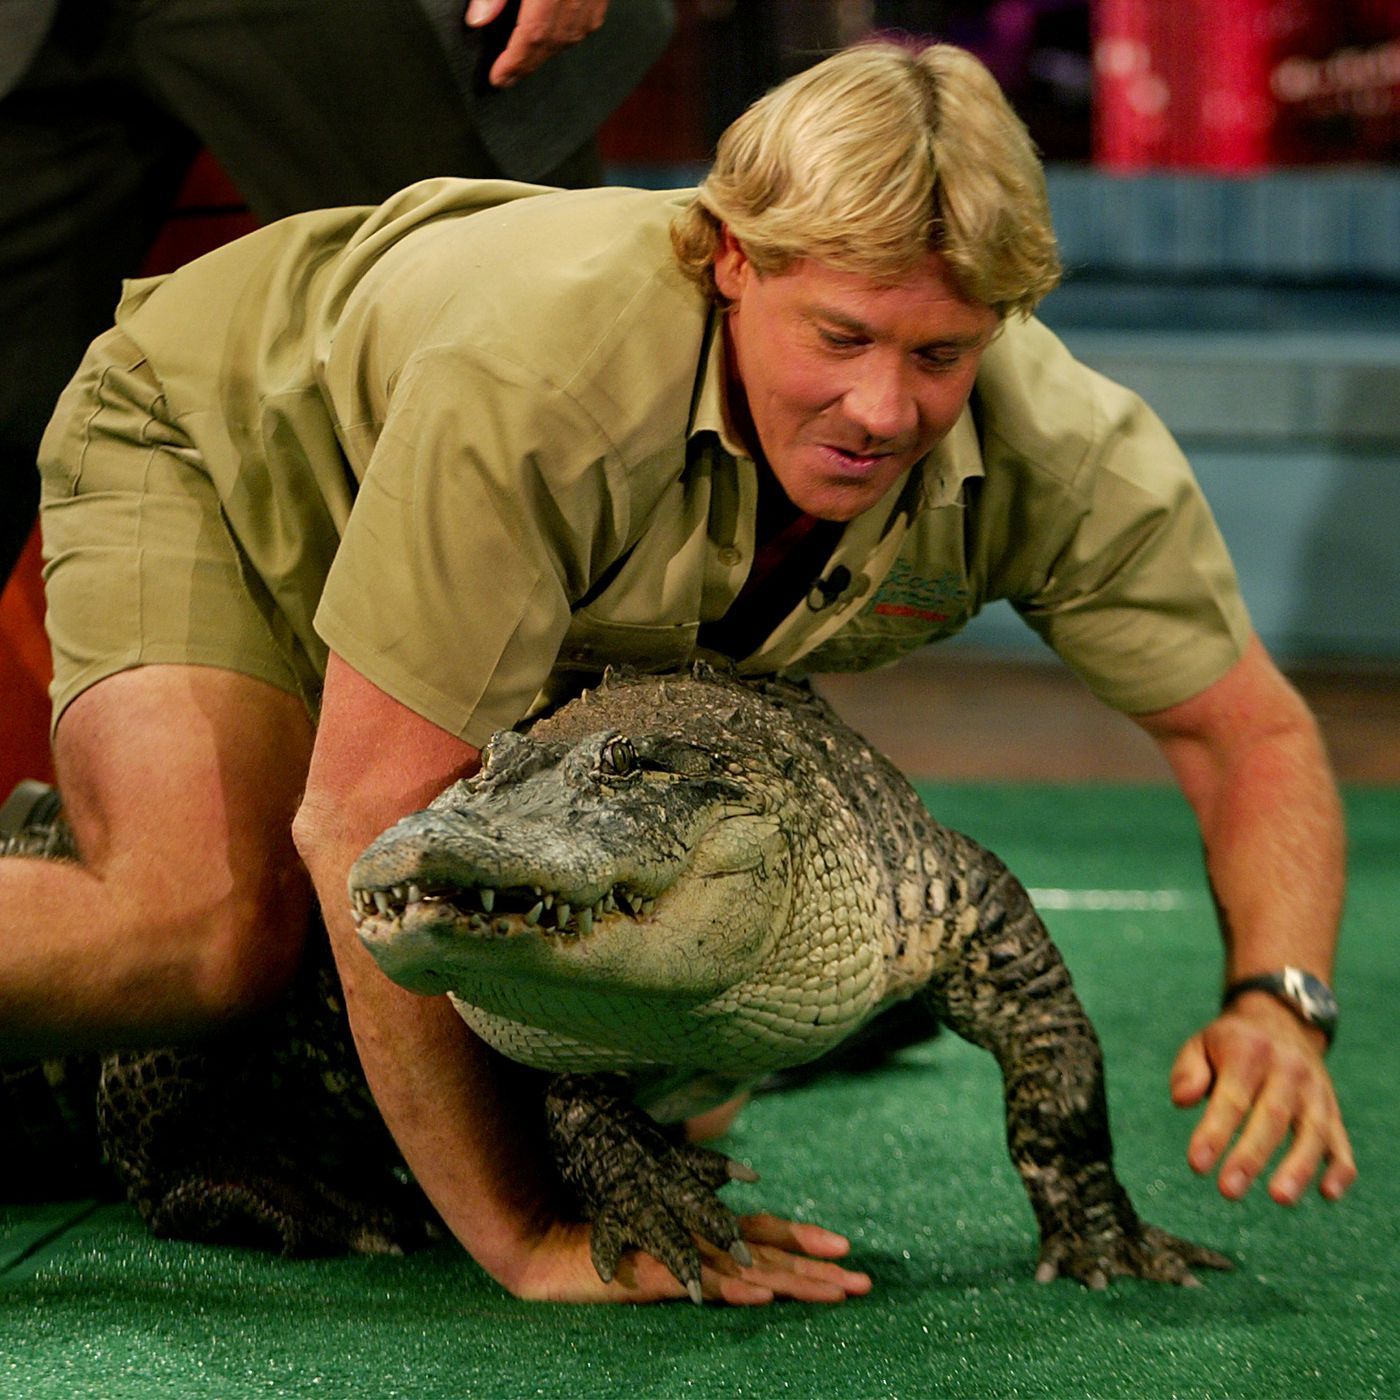 Crocodile Hunter” Steve Irwin's mission was to save wildlife. He did